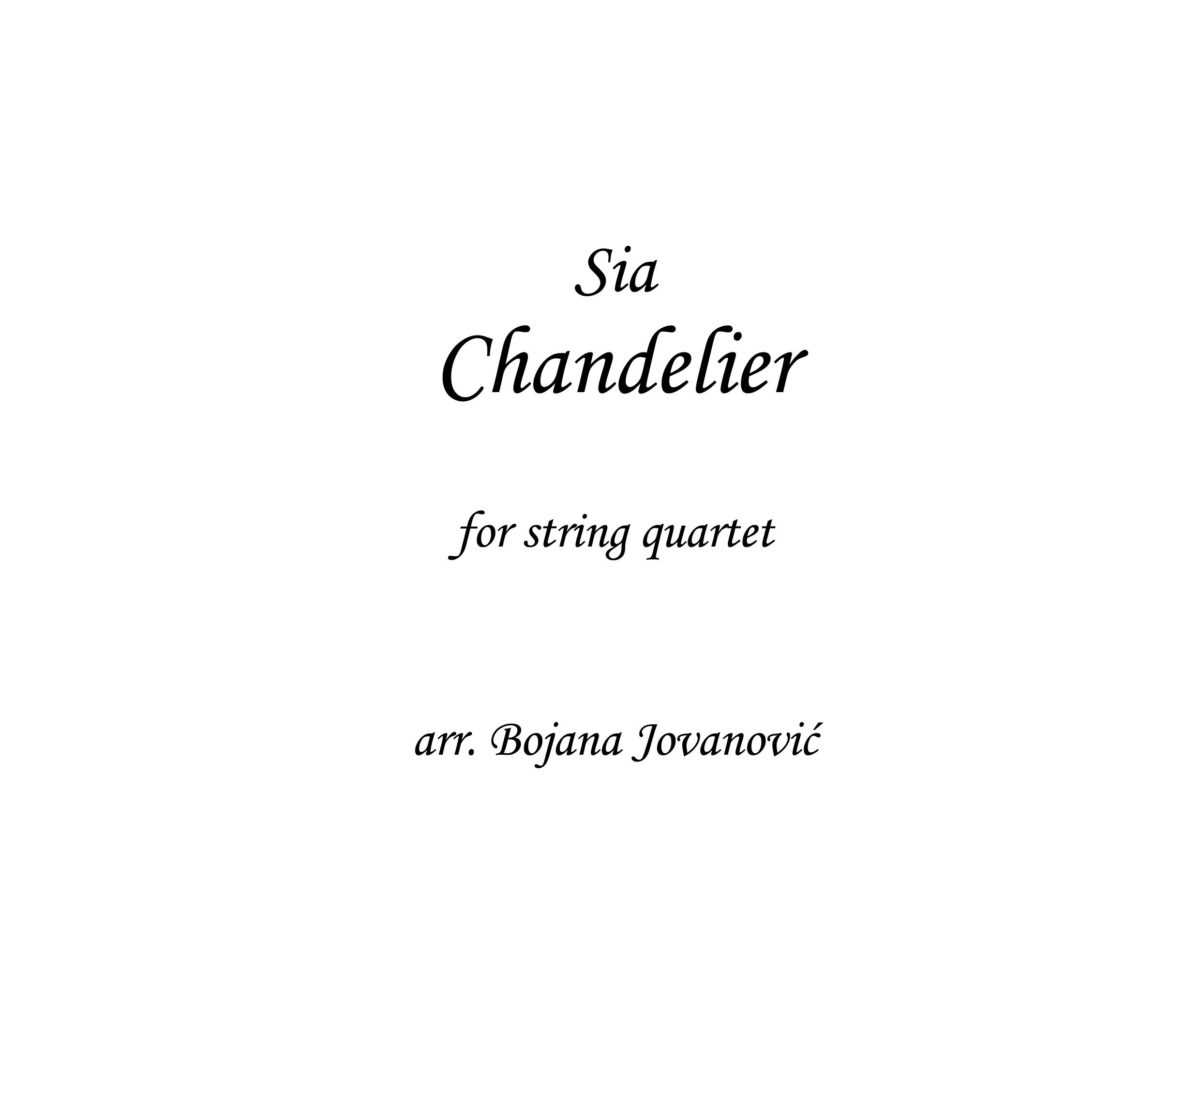 Chandelier (Sia) - Sheet Music